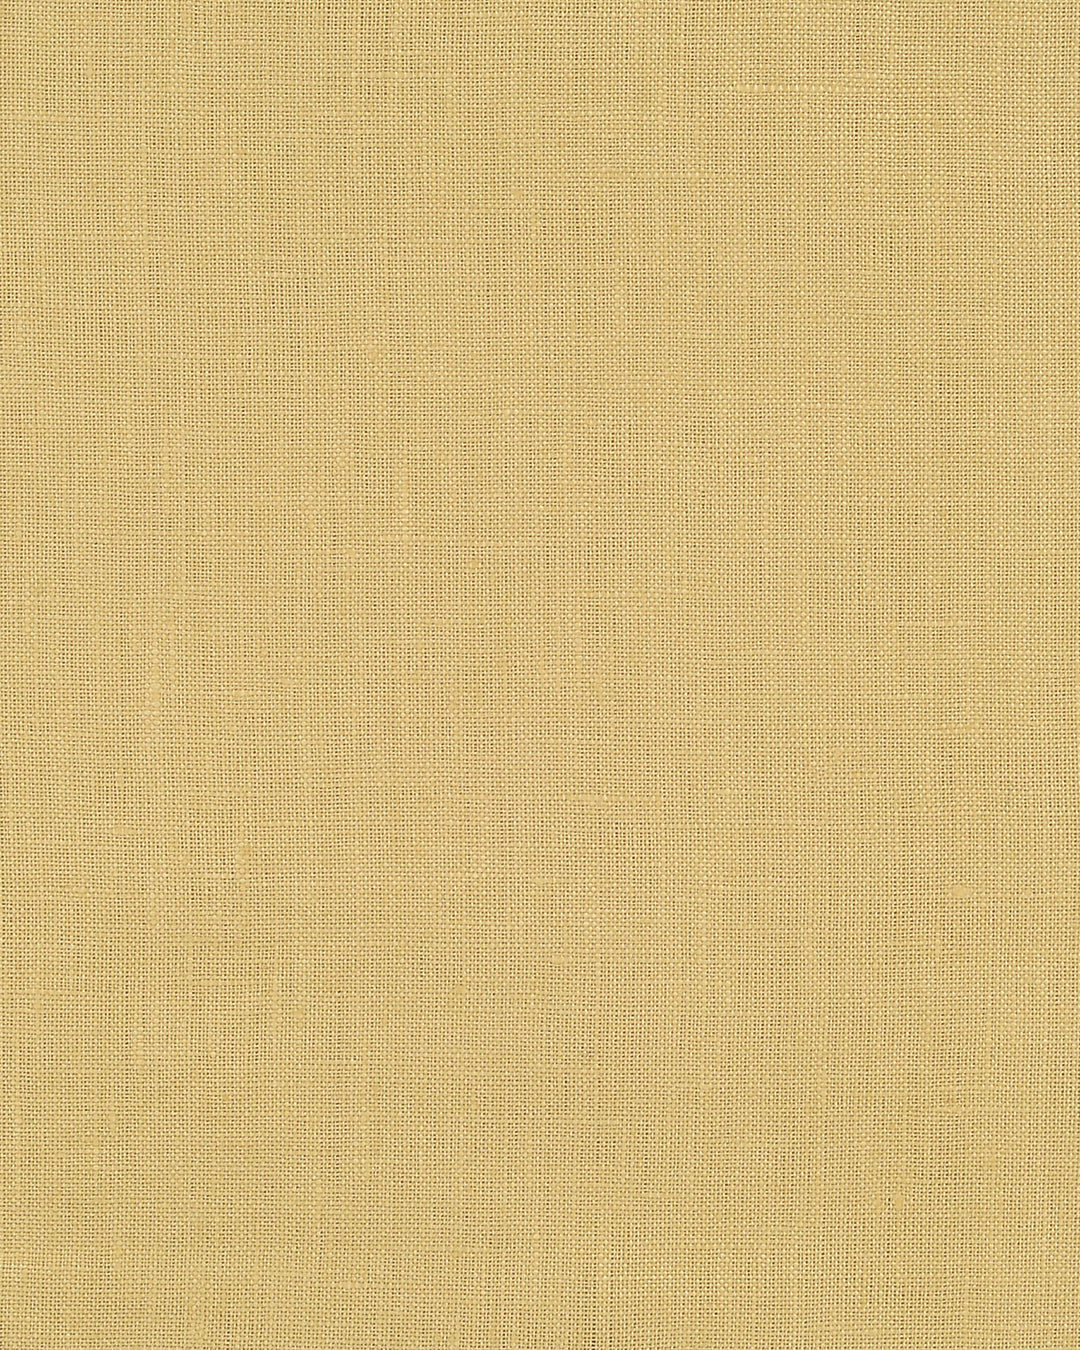 Goldish Yellow Linen